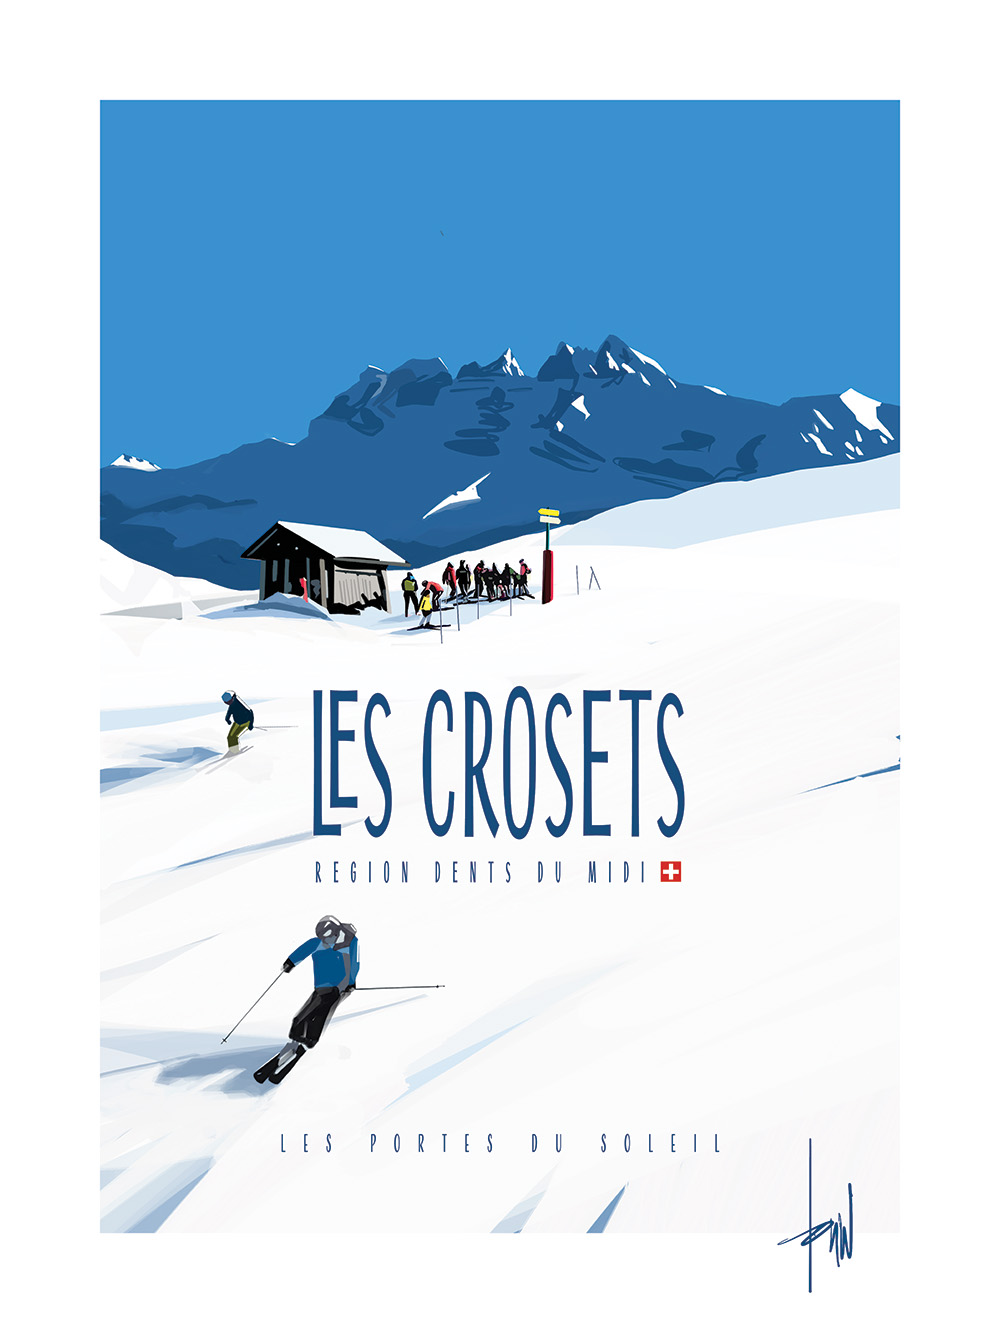 Ski Poster Les Crosets Region Dents du Midi Switzerland Portes du Soleil Design by Danny Touw